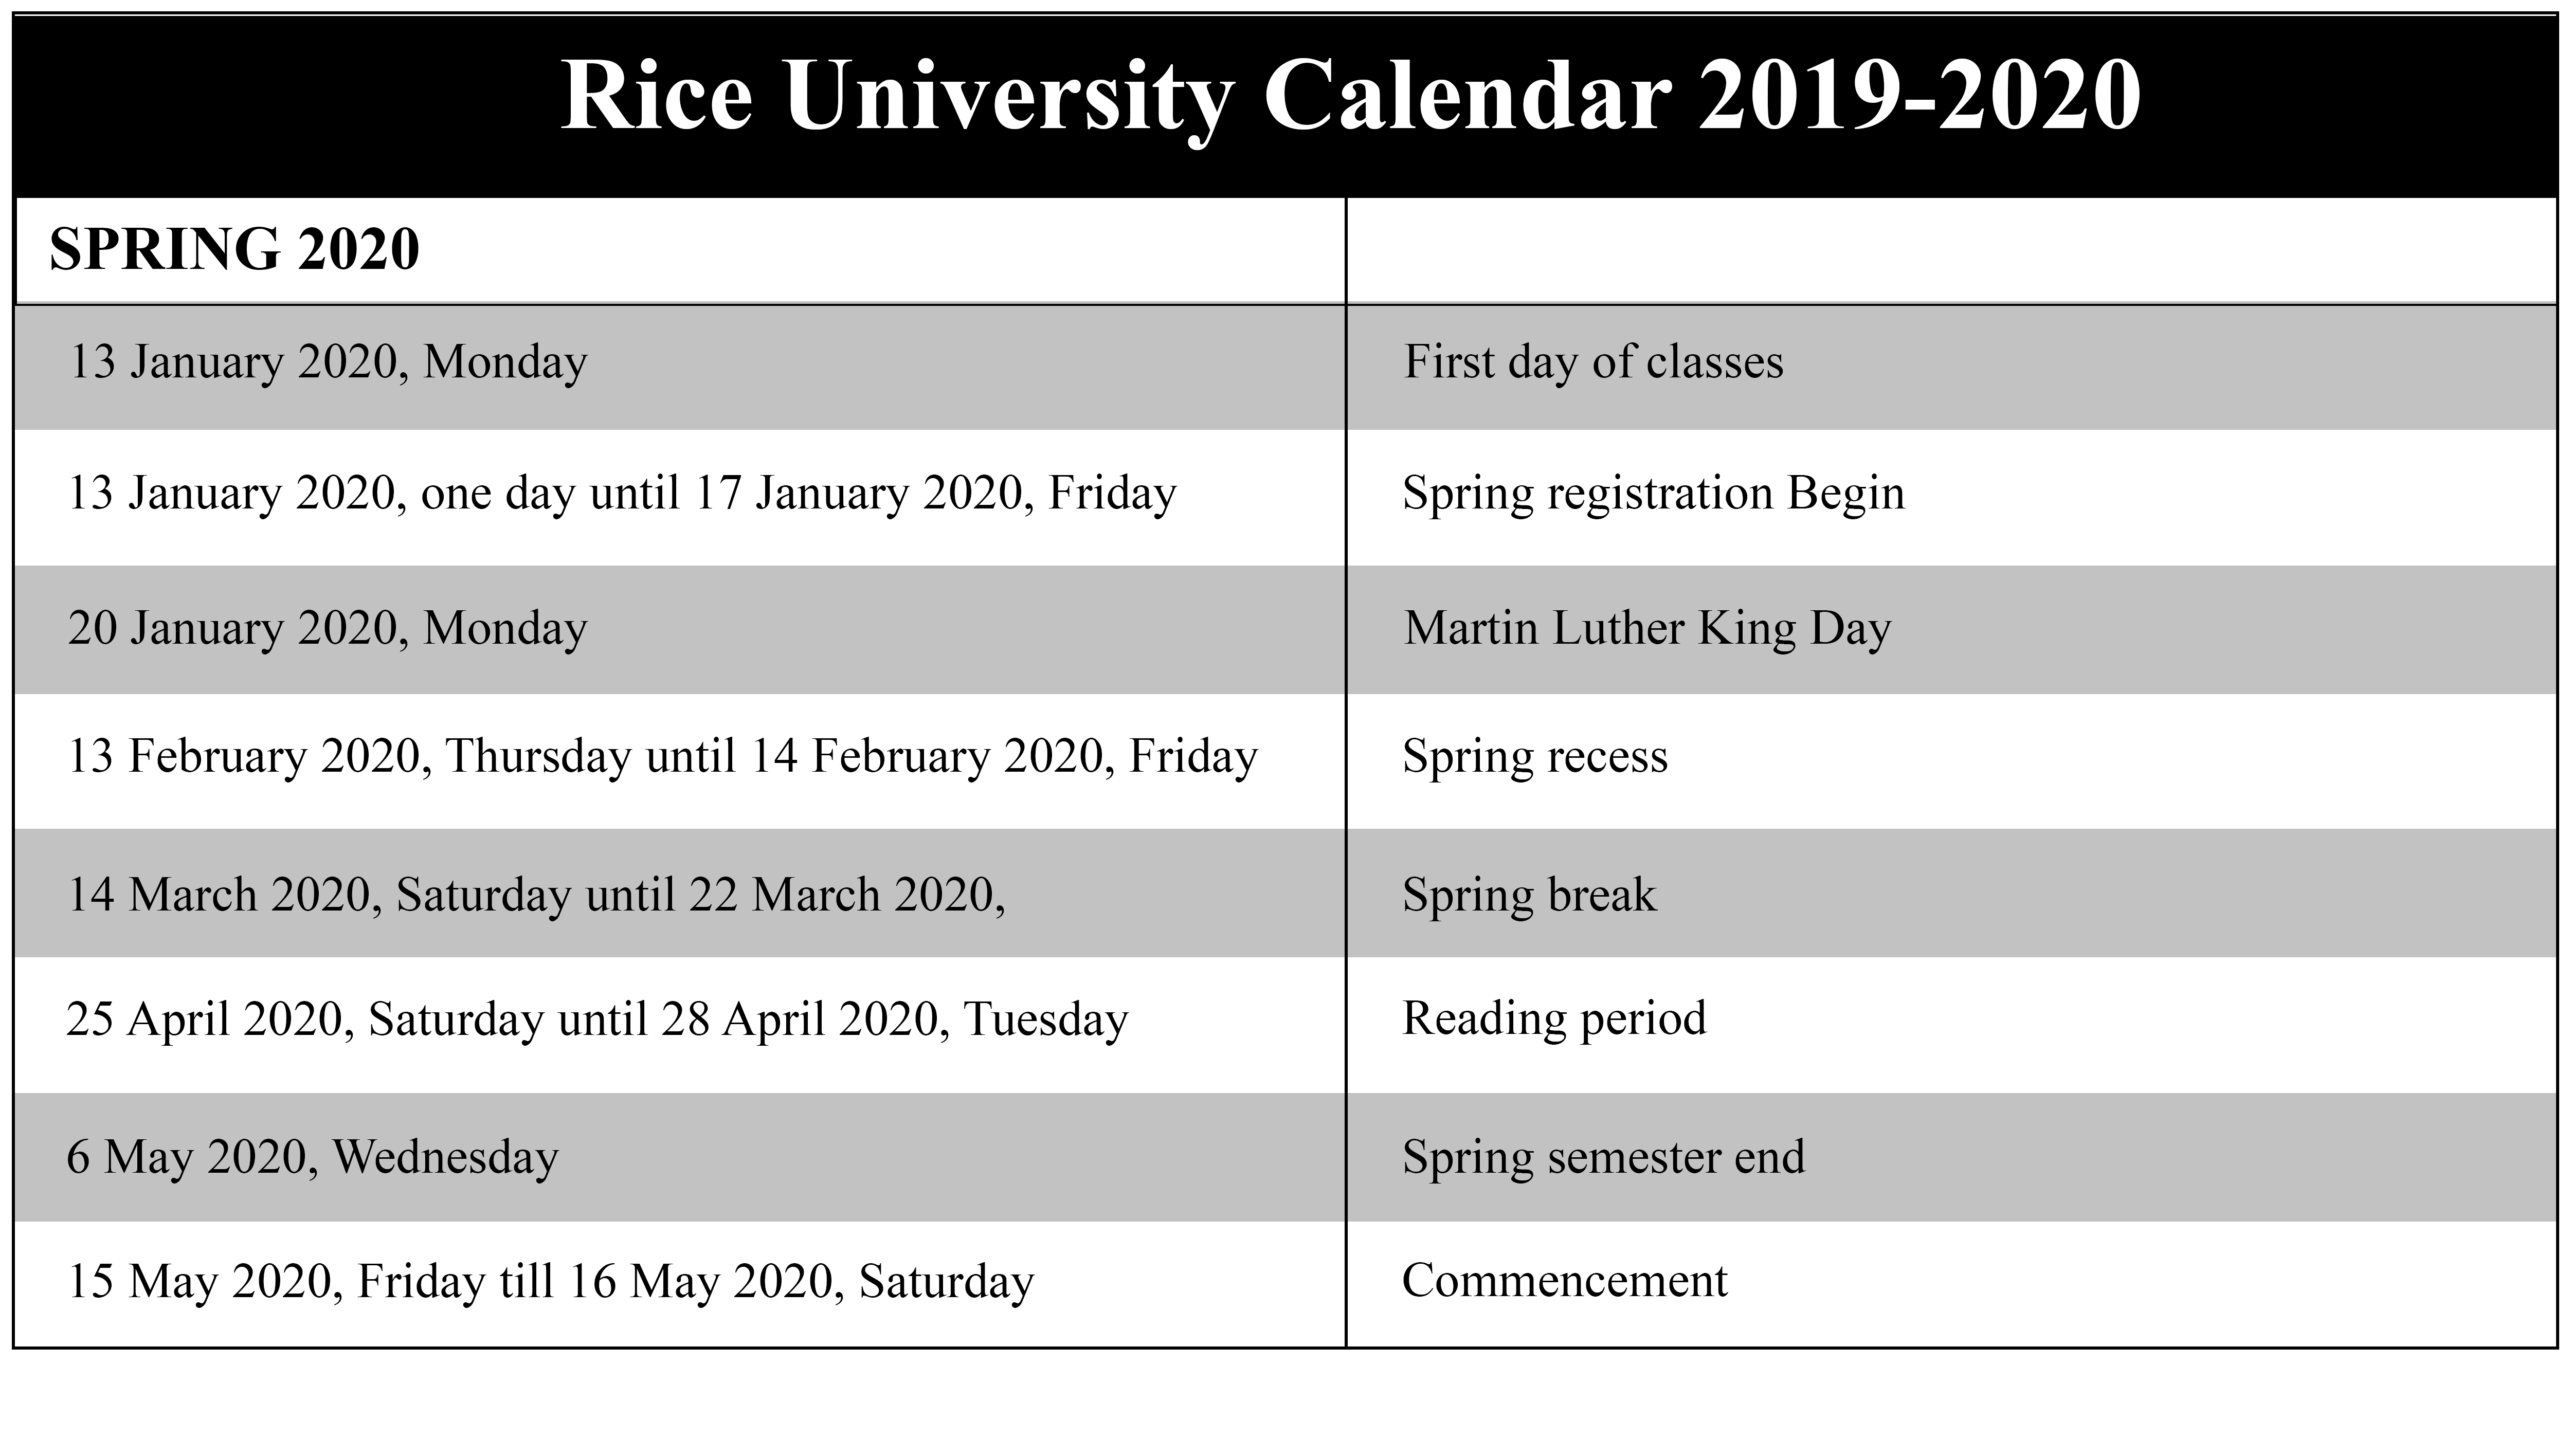 rice university academic calendar spring 2021 Rice University Calendar 2019 2020 Spring rice university academic calendar spring 2021